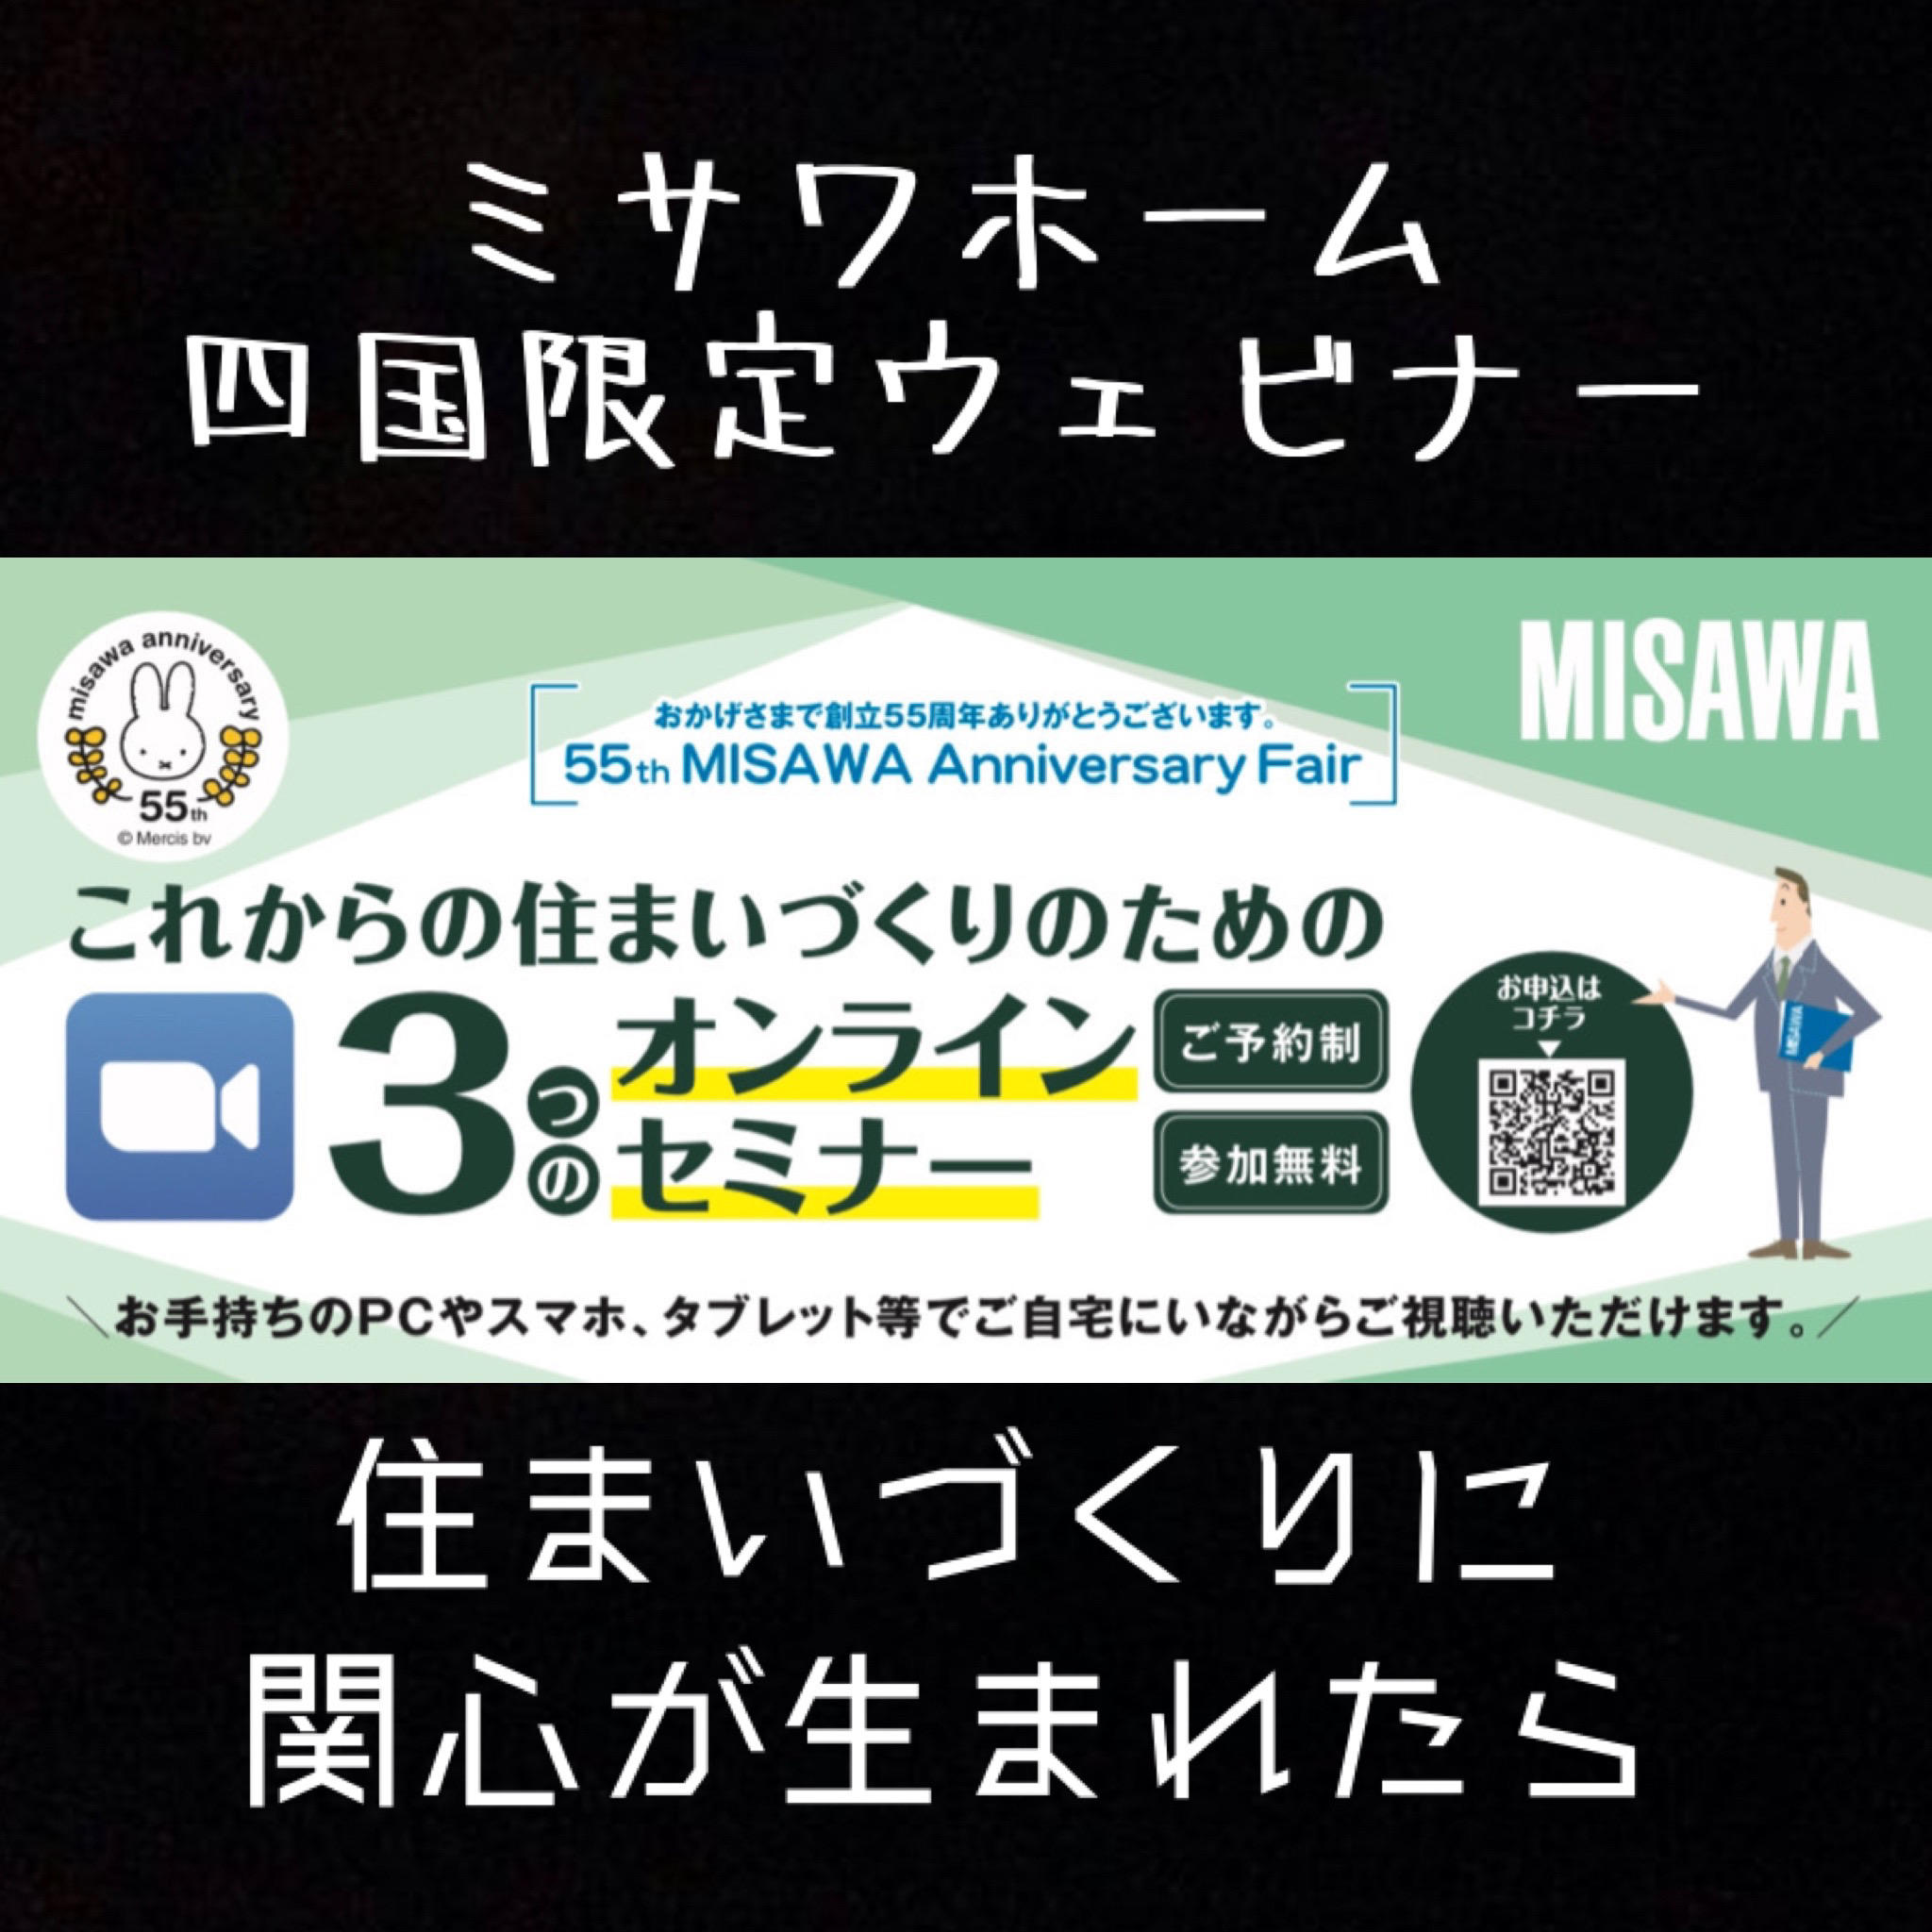 https://shikoku.misawa.co.jp/area_kouchi/6c780dd7b771809d4223afcad88b89adee13a6c4.JPG